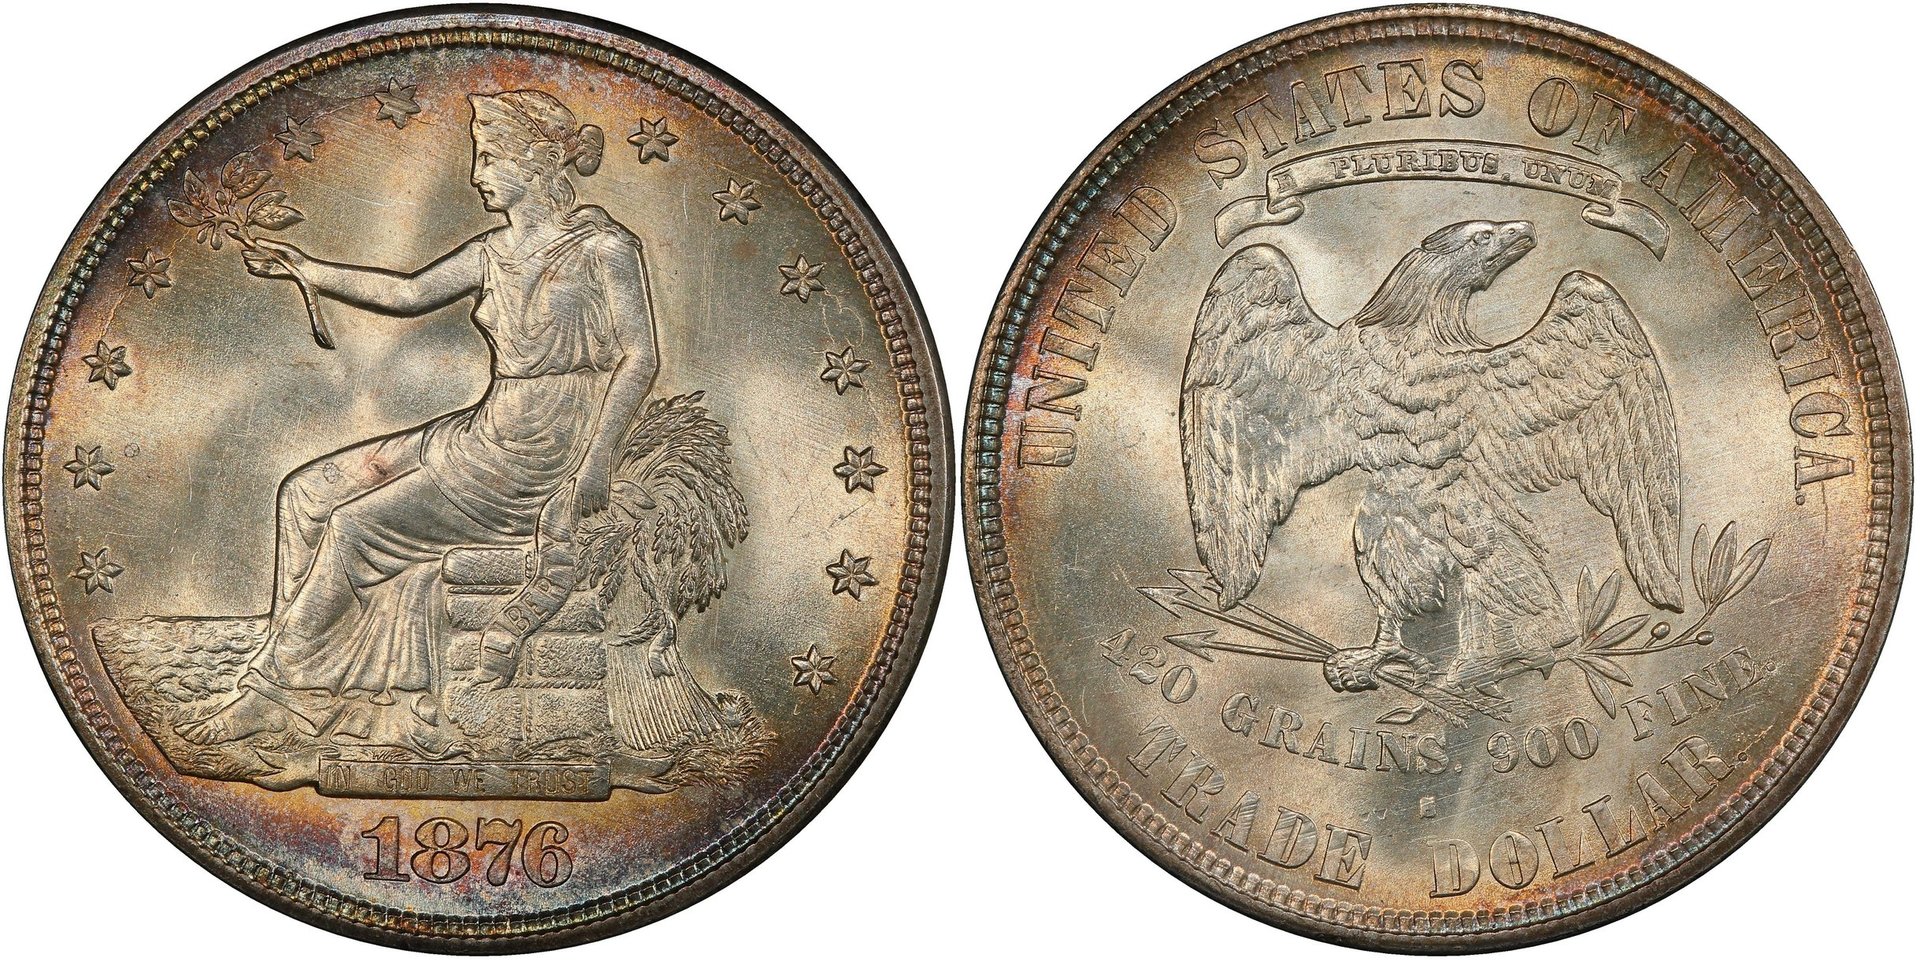 1876 s micros weak eagle strike coinfacts.jpg